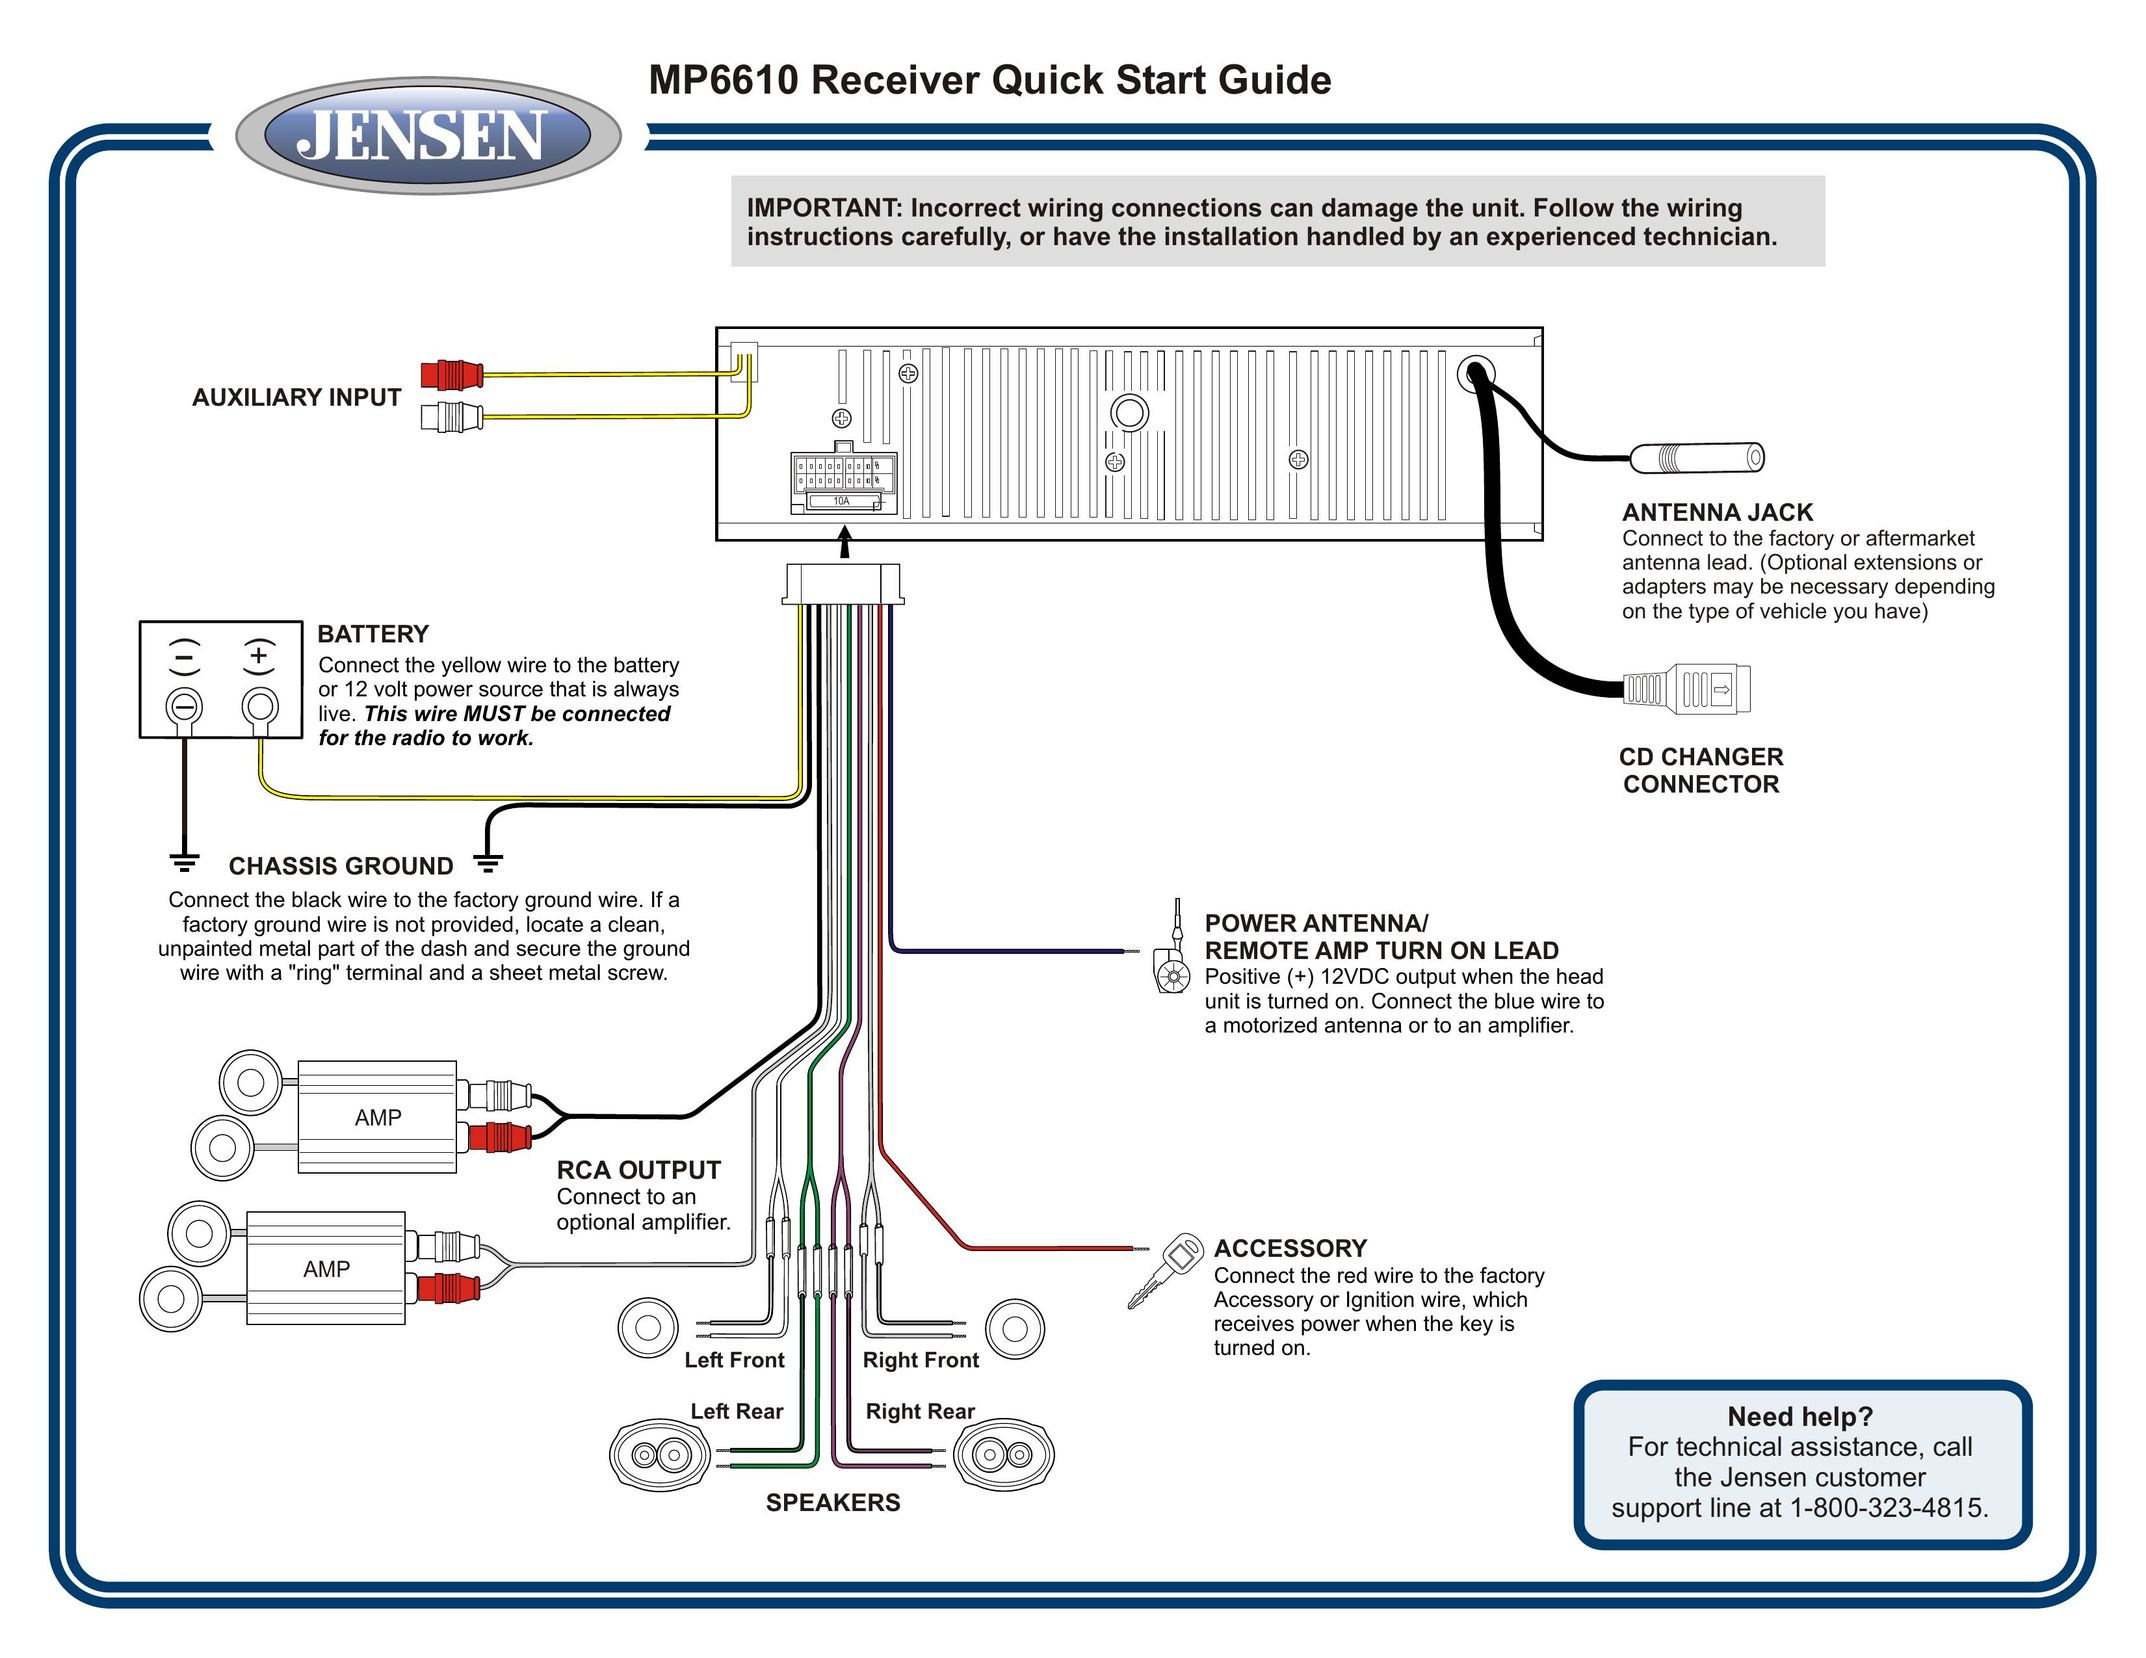 Jensen MP6610 Car Stereo System User Manual